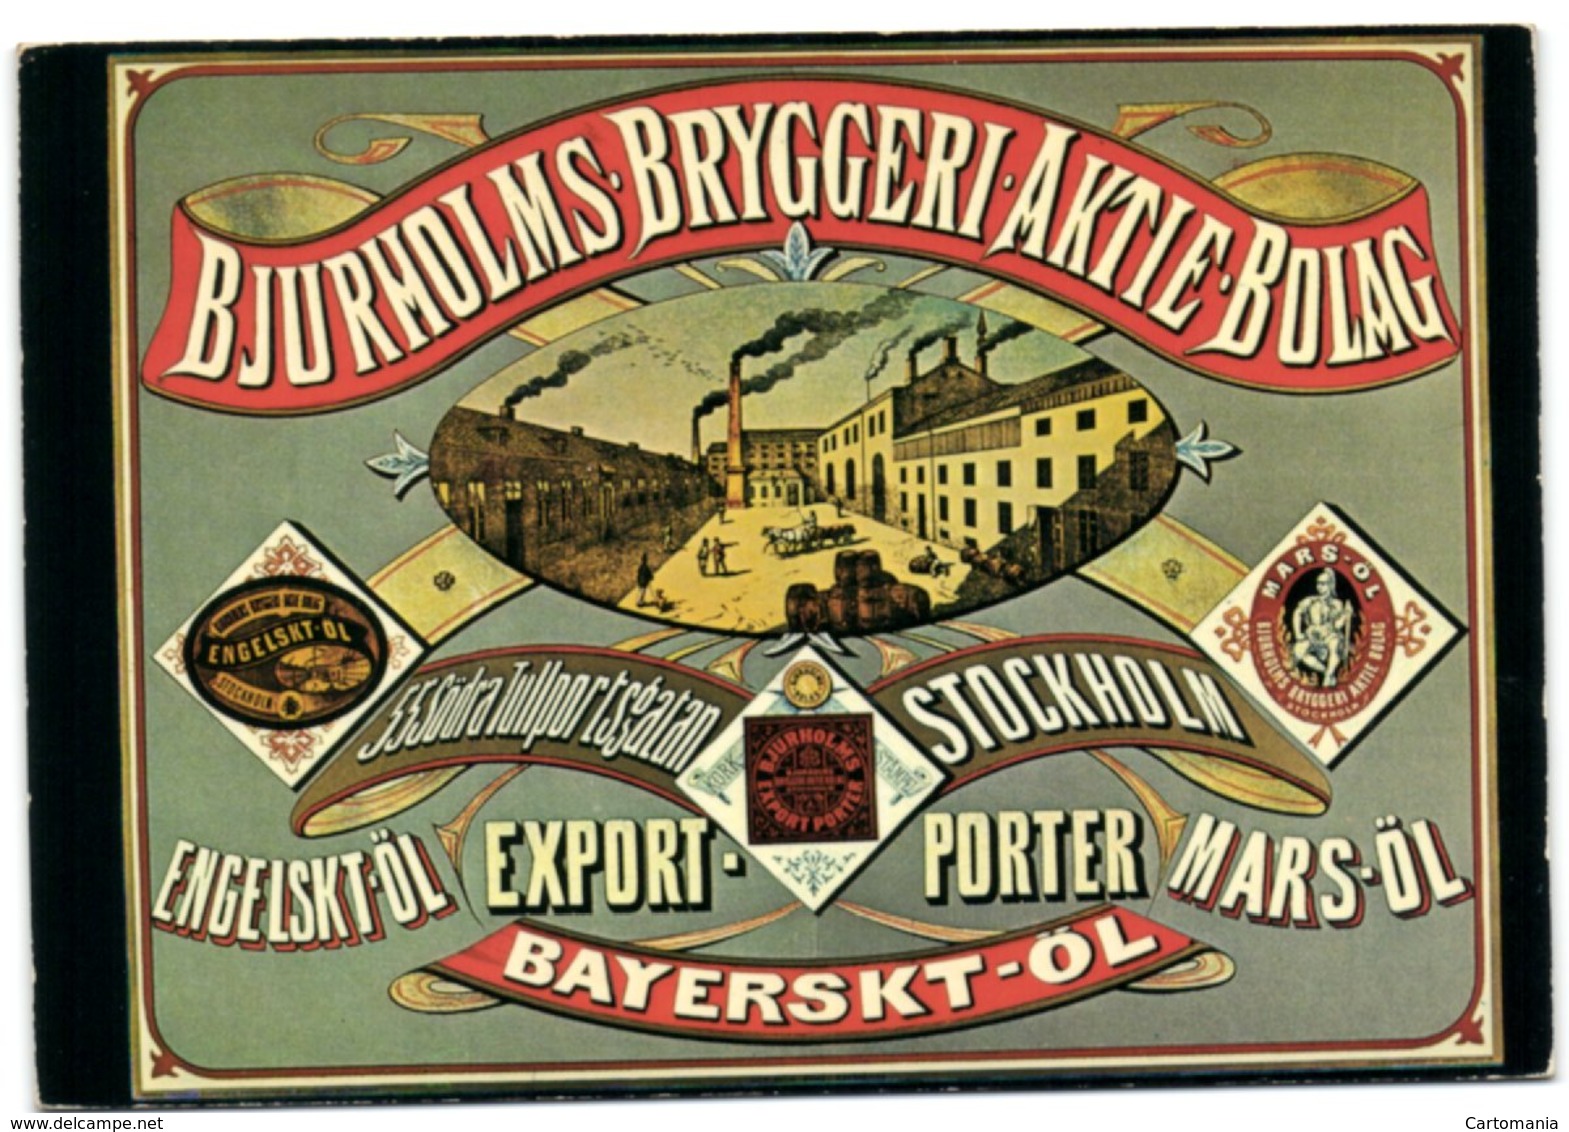 The Bjurholm Brewery - Stockholm 1706-1910 - Sweden